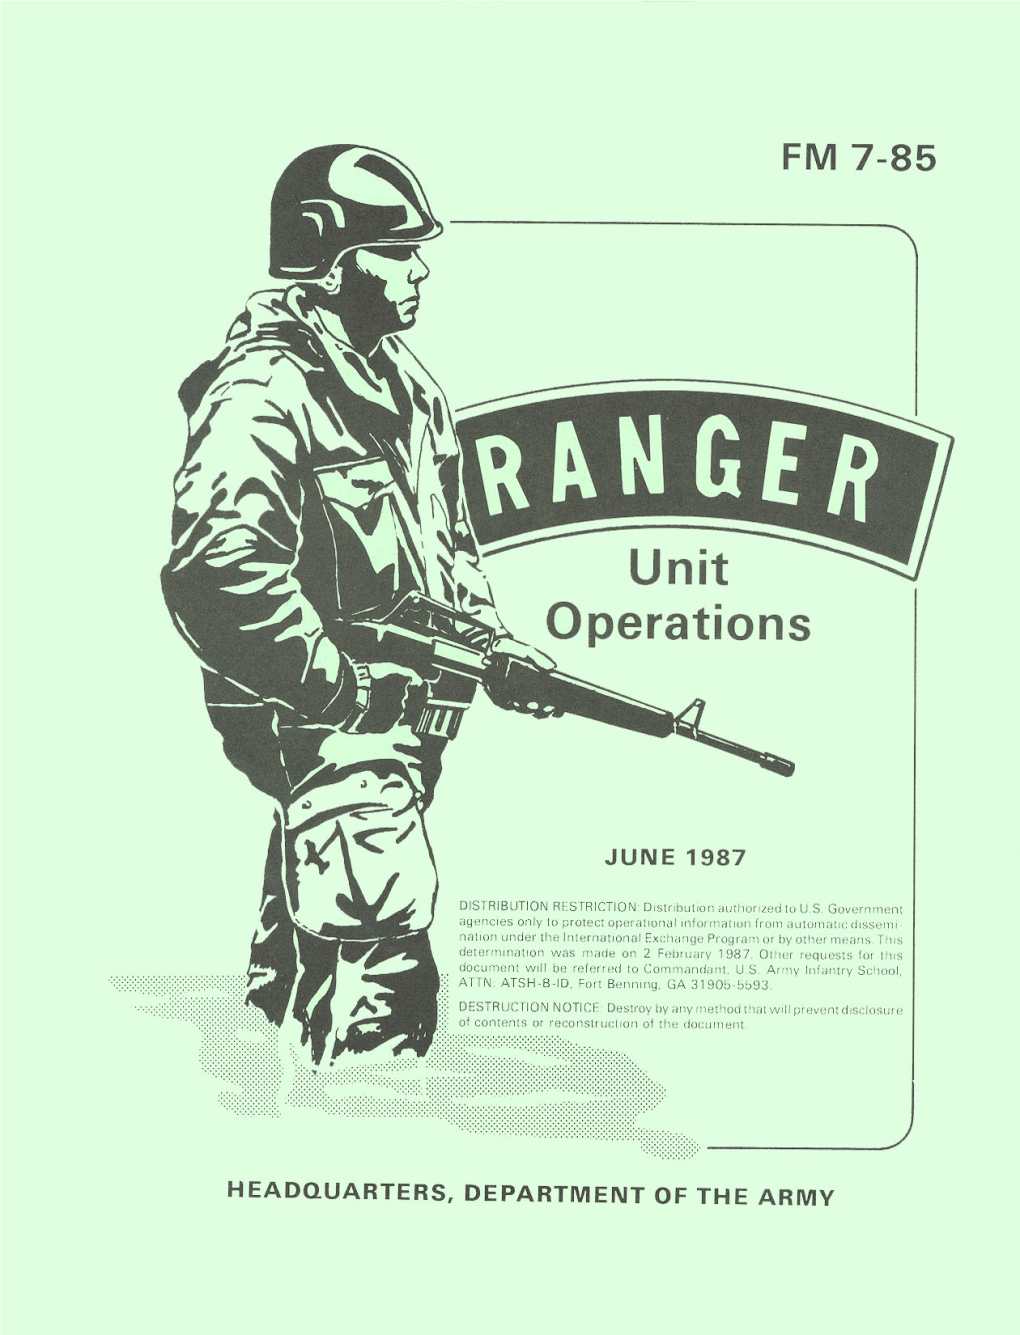 FM 7-85: Ranger Unit Operations